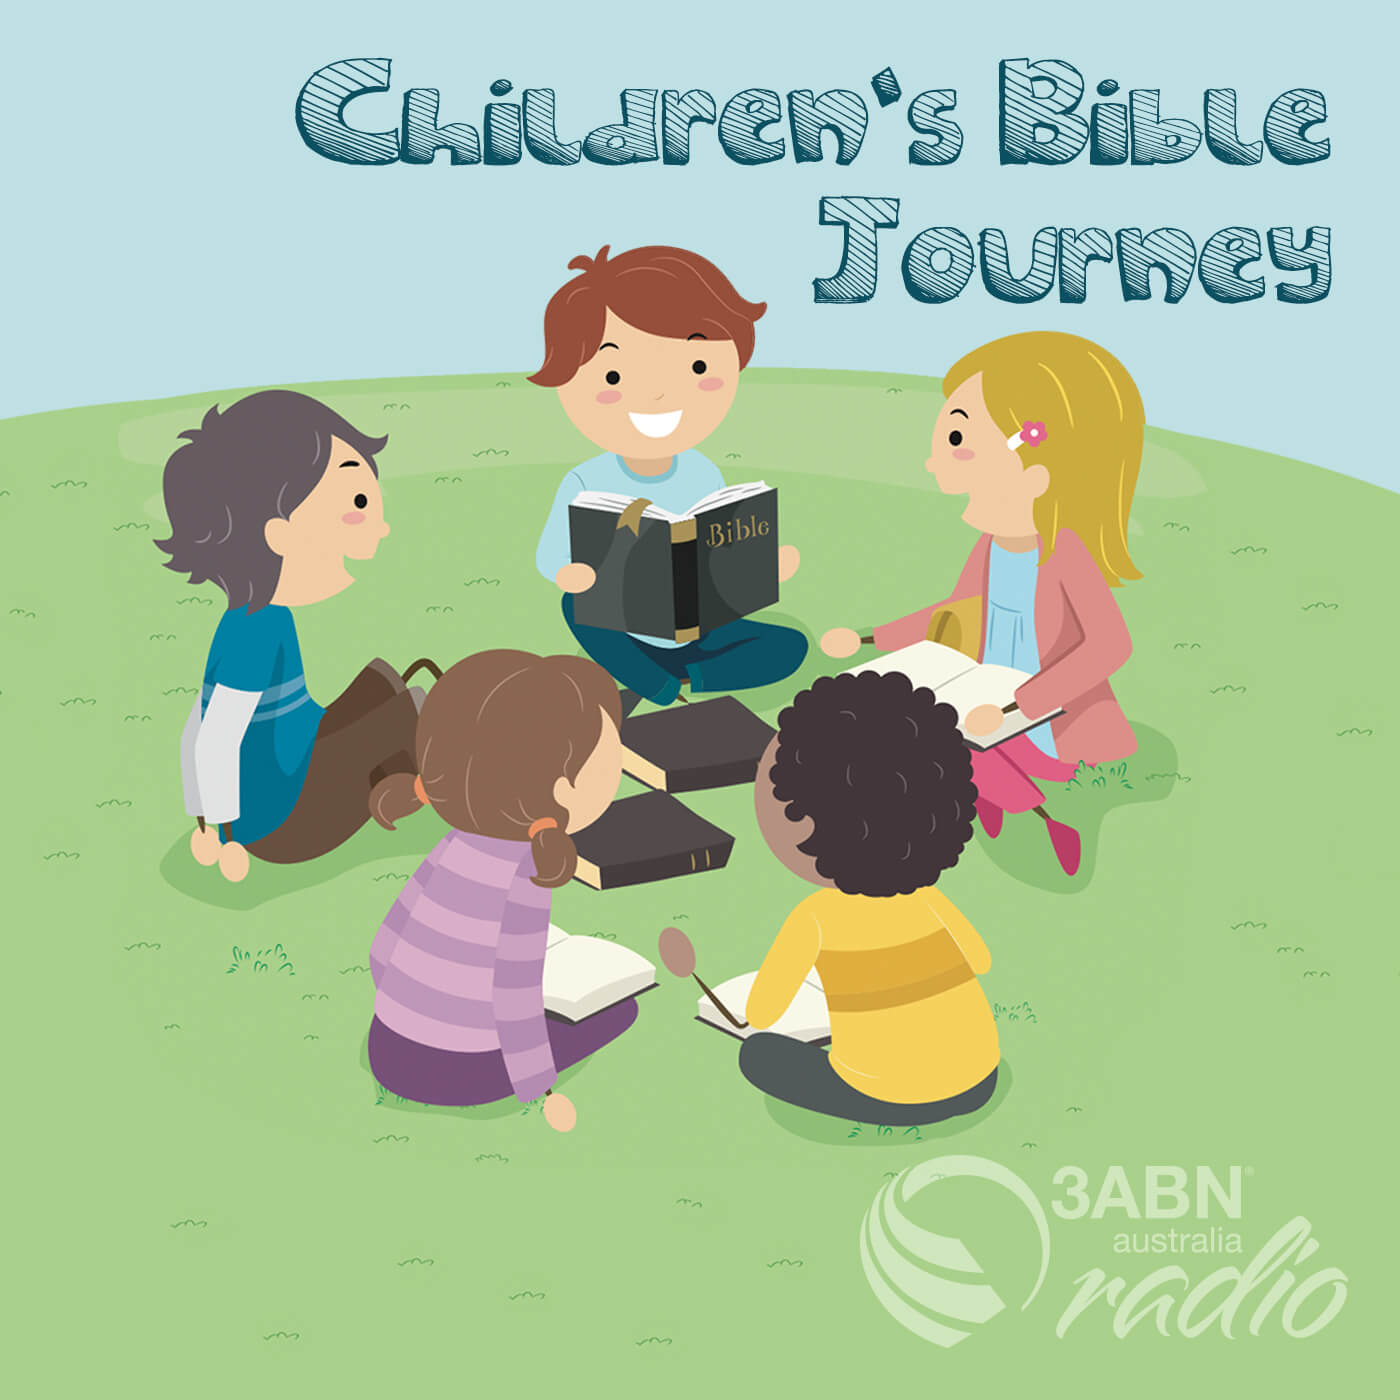 Children's Bible Journey - 2131